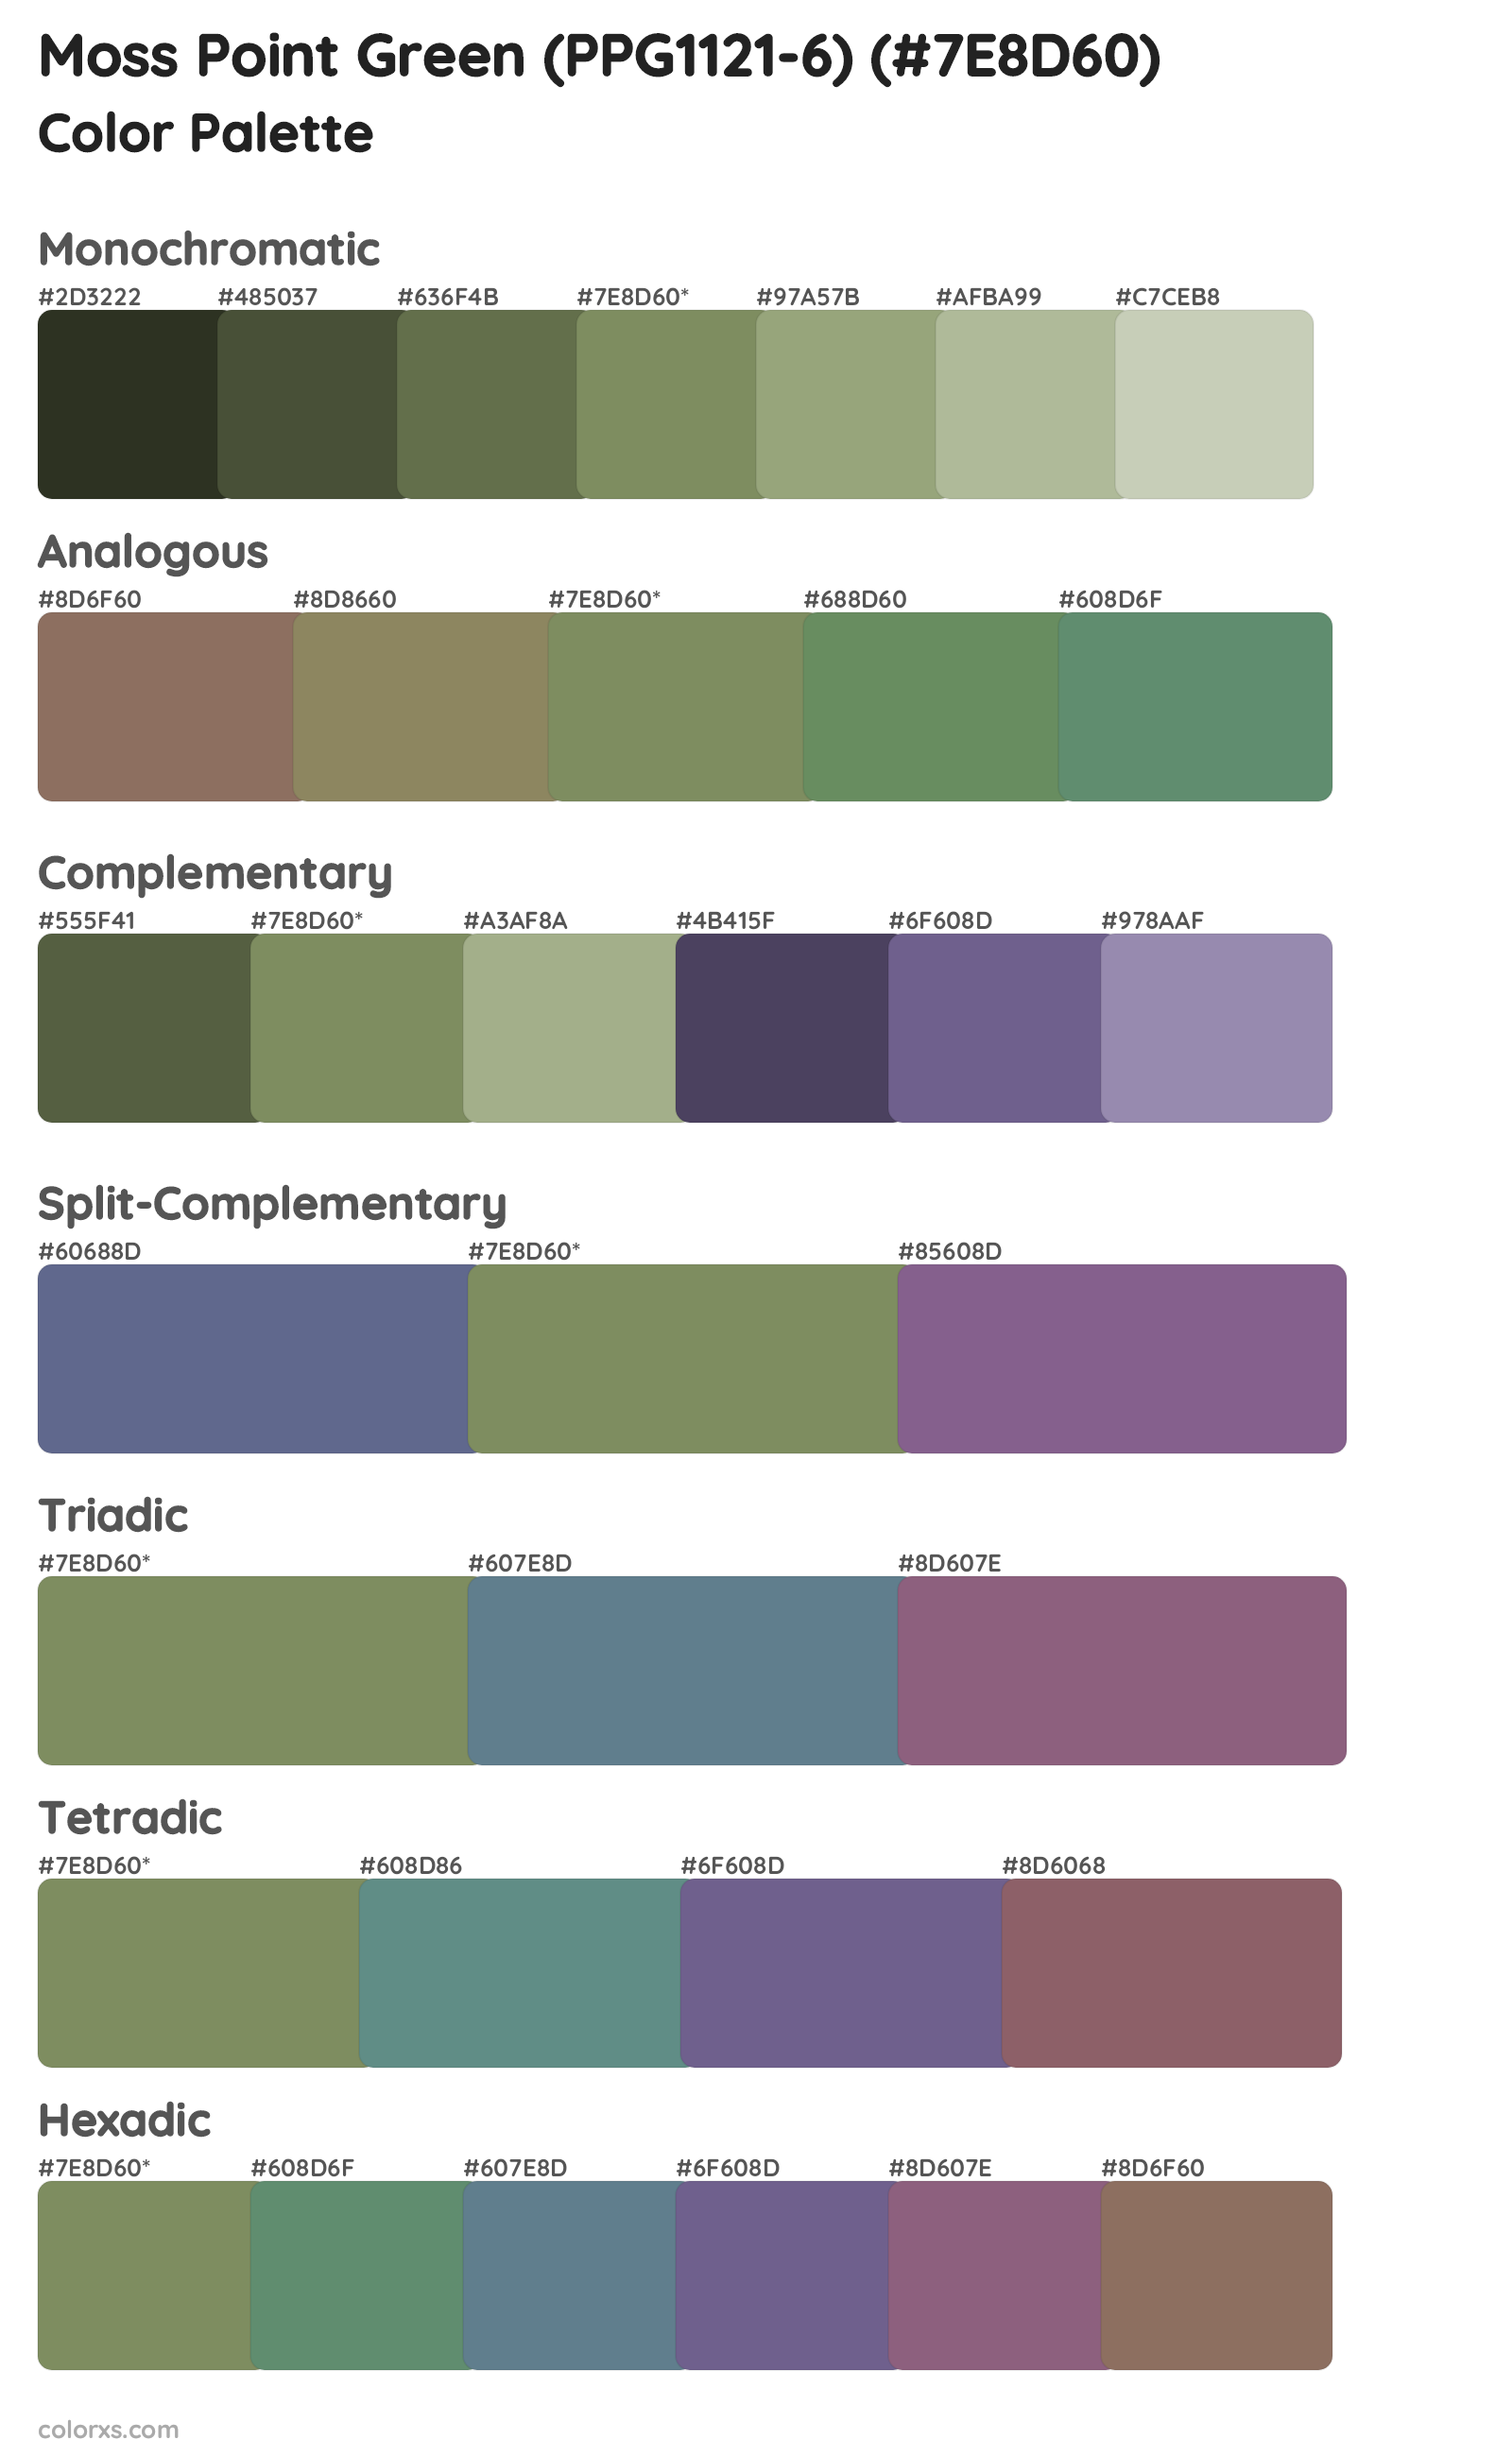 Moss Point Green (PPG1121-6) Color Scheme Palettes